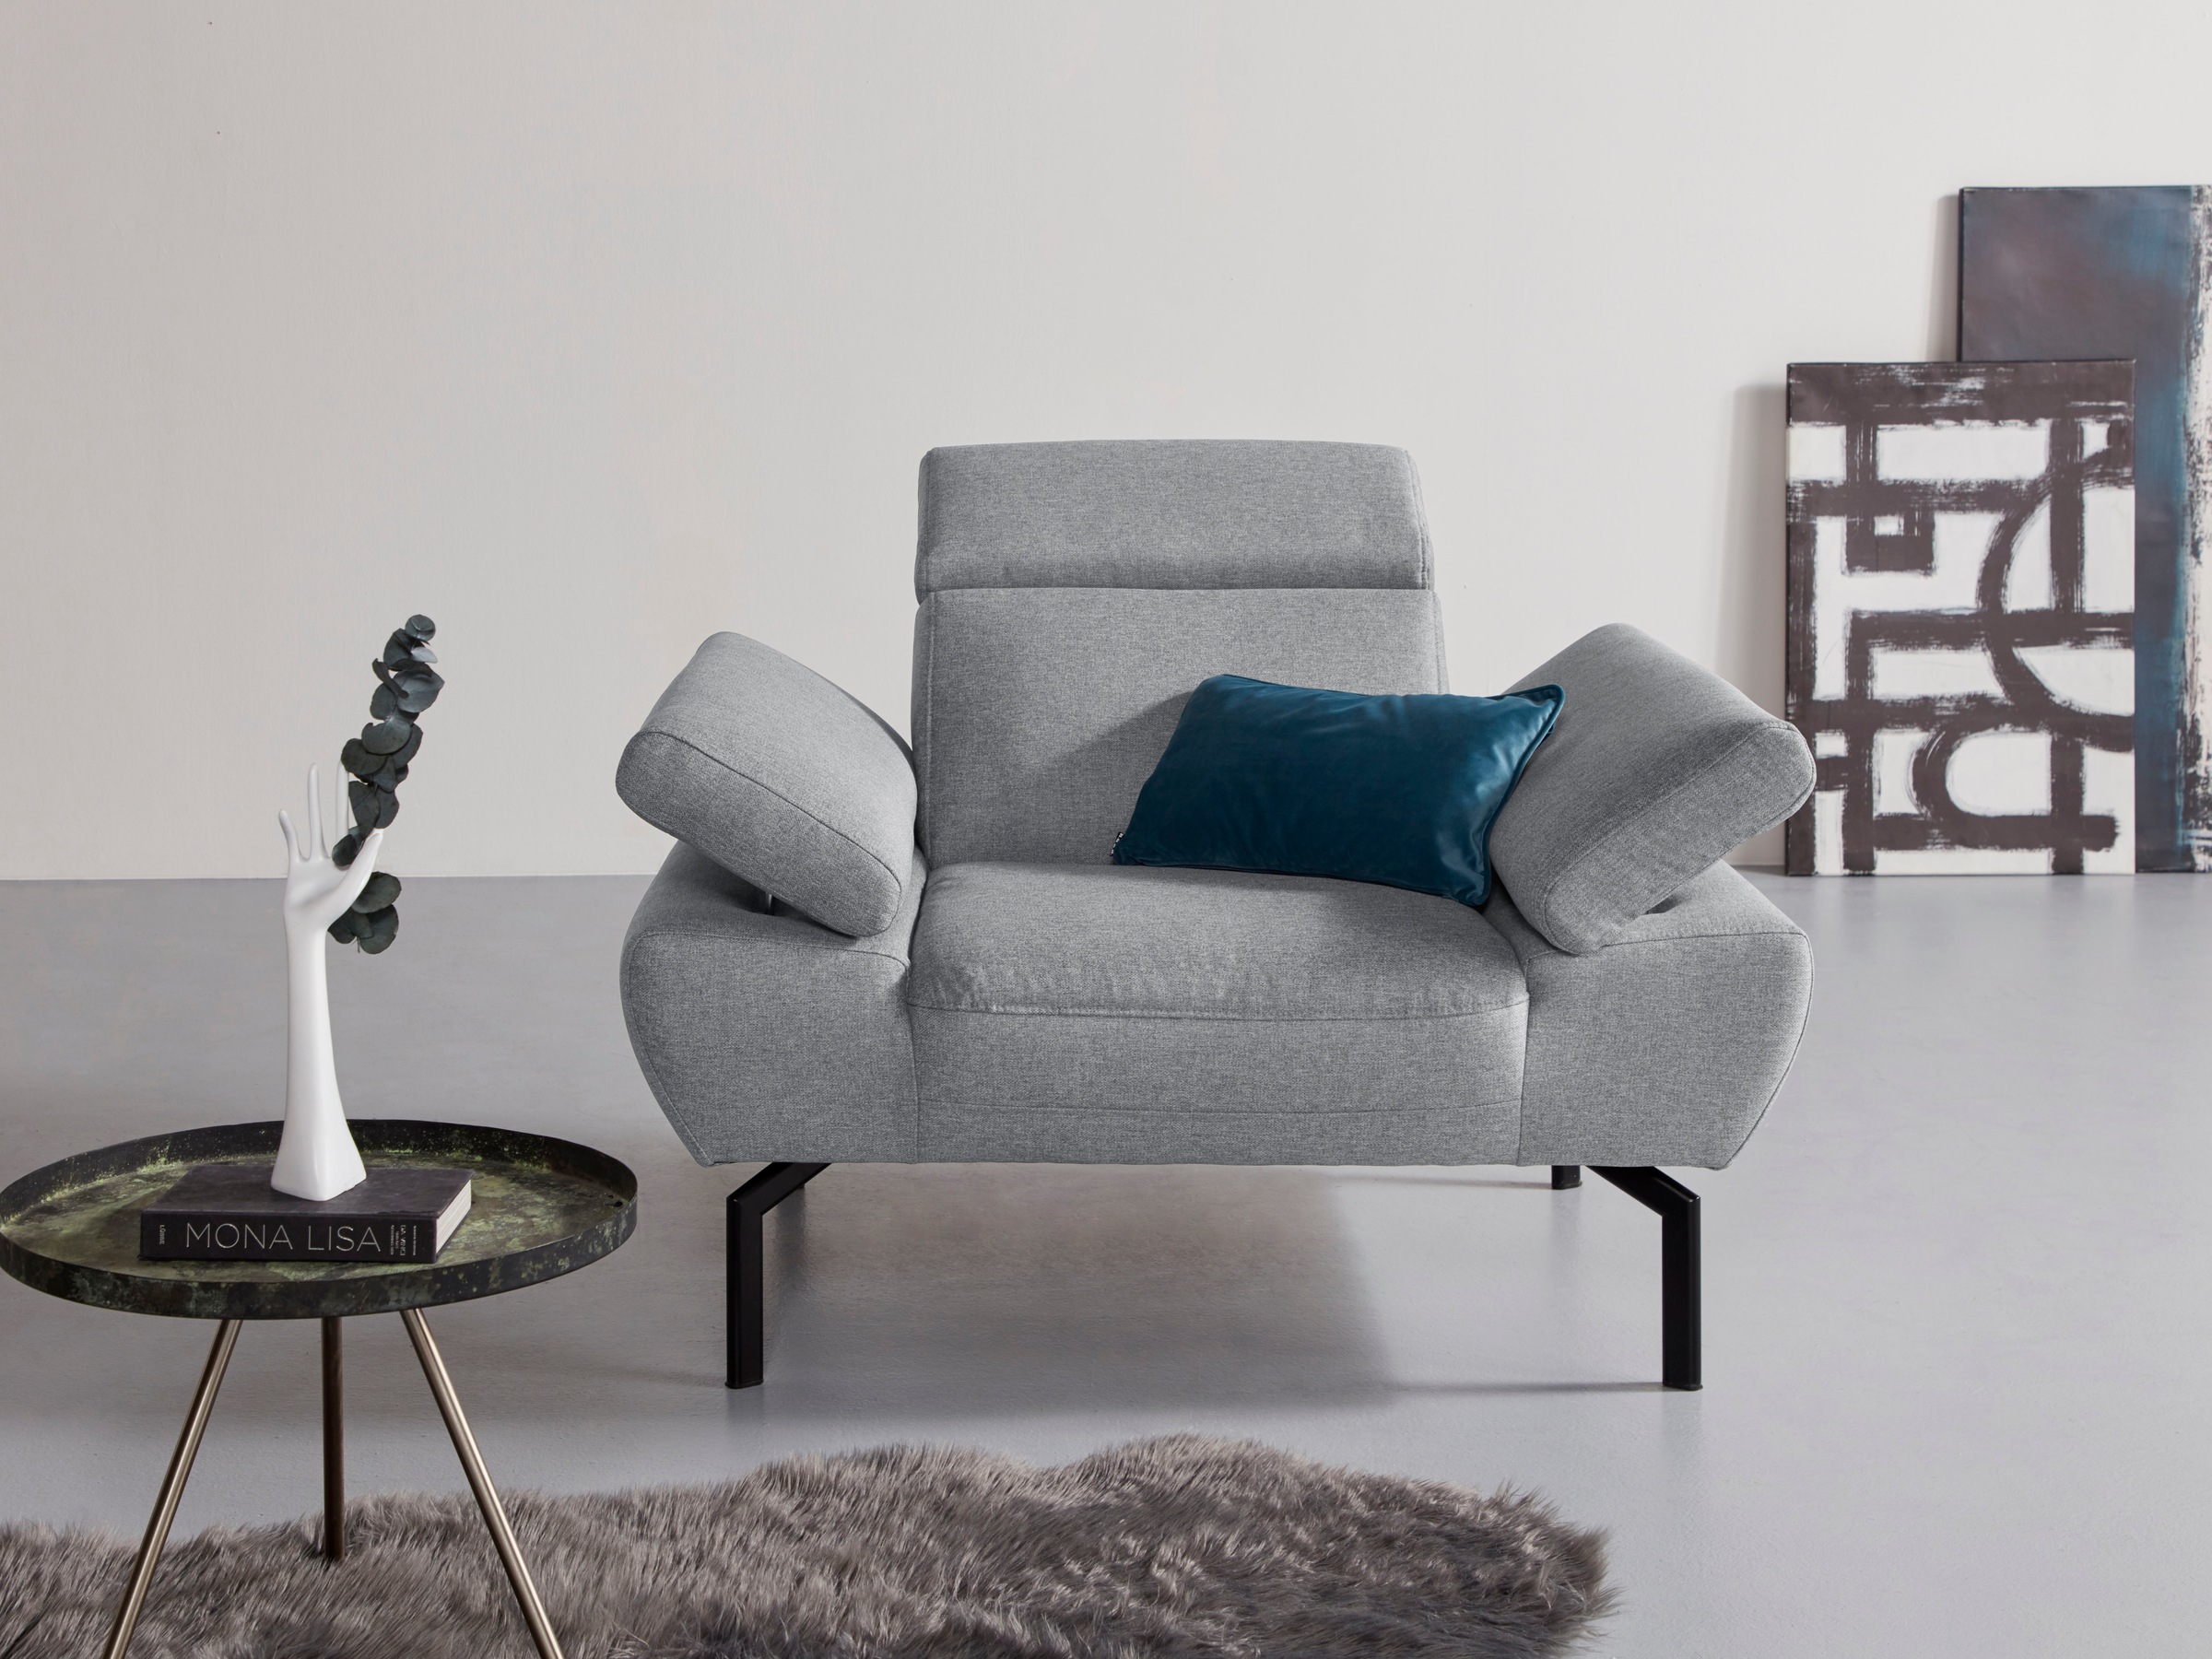 Places of Style Sessel »Trapino Luxus«, wahlweise mit Rückenverstellung, Luxus-Microfaser in Lederoptik